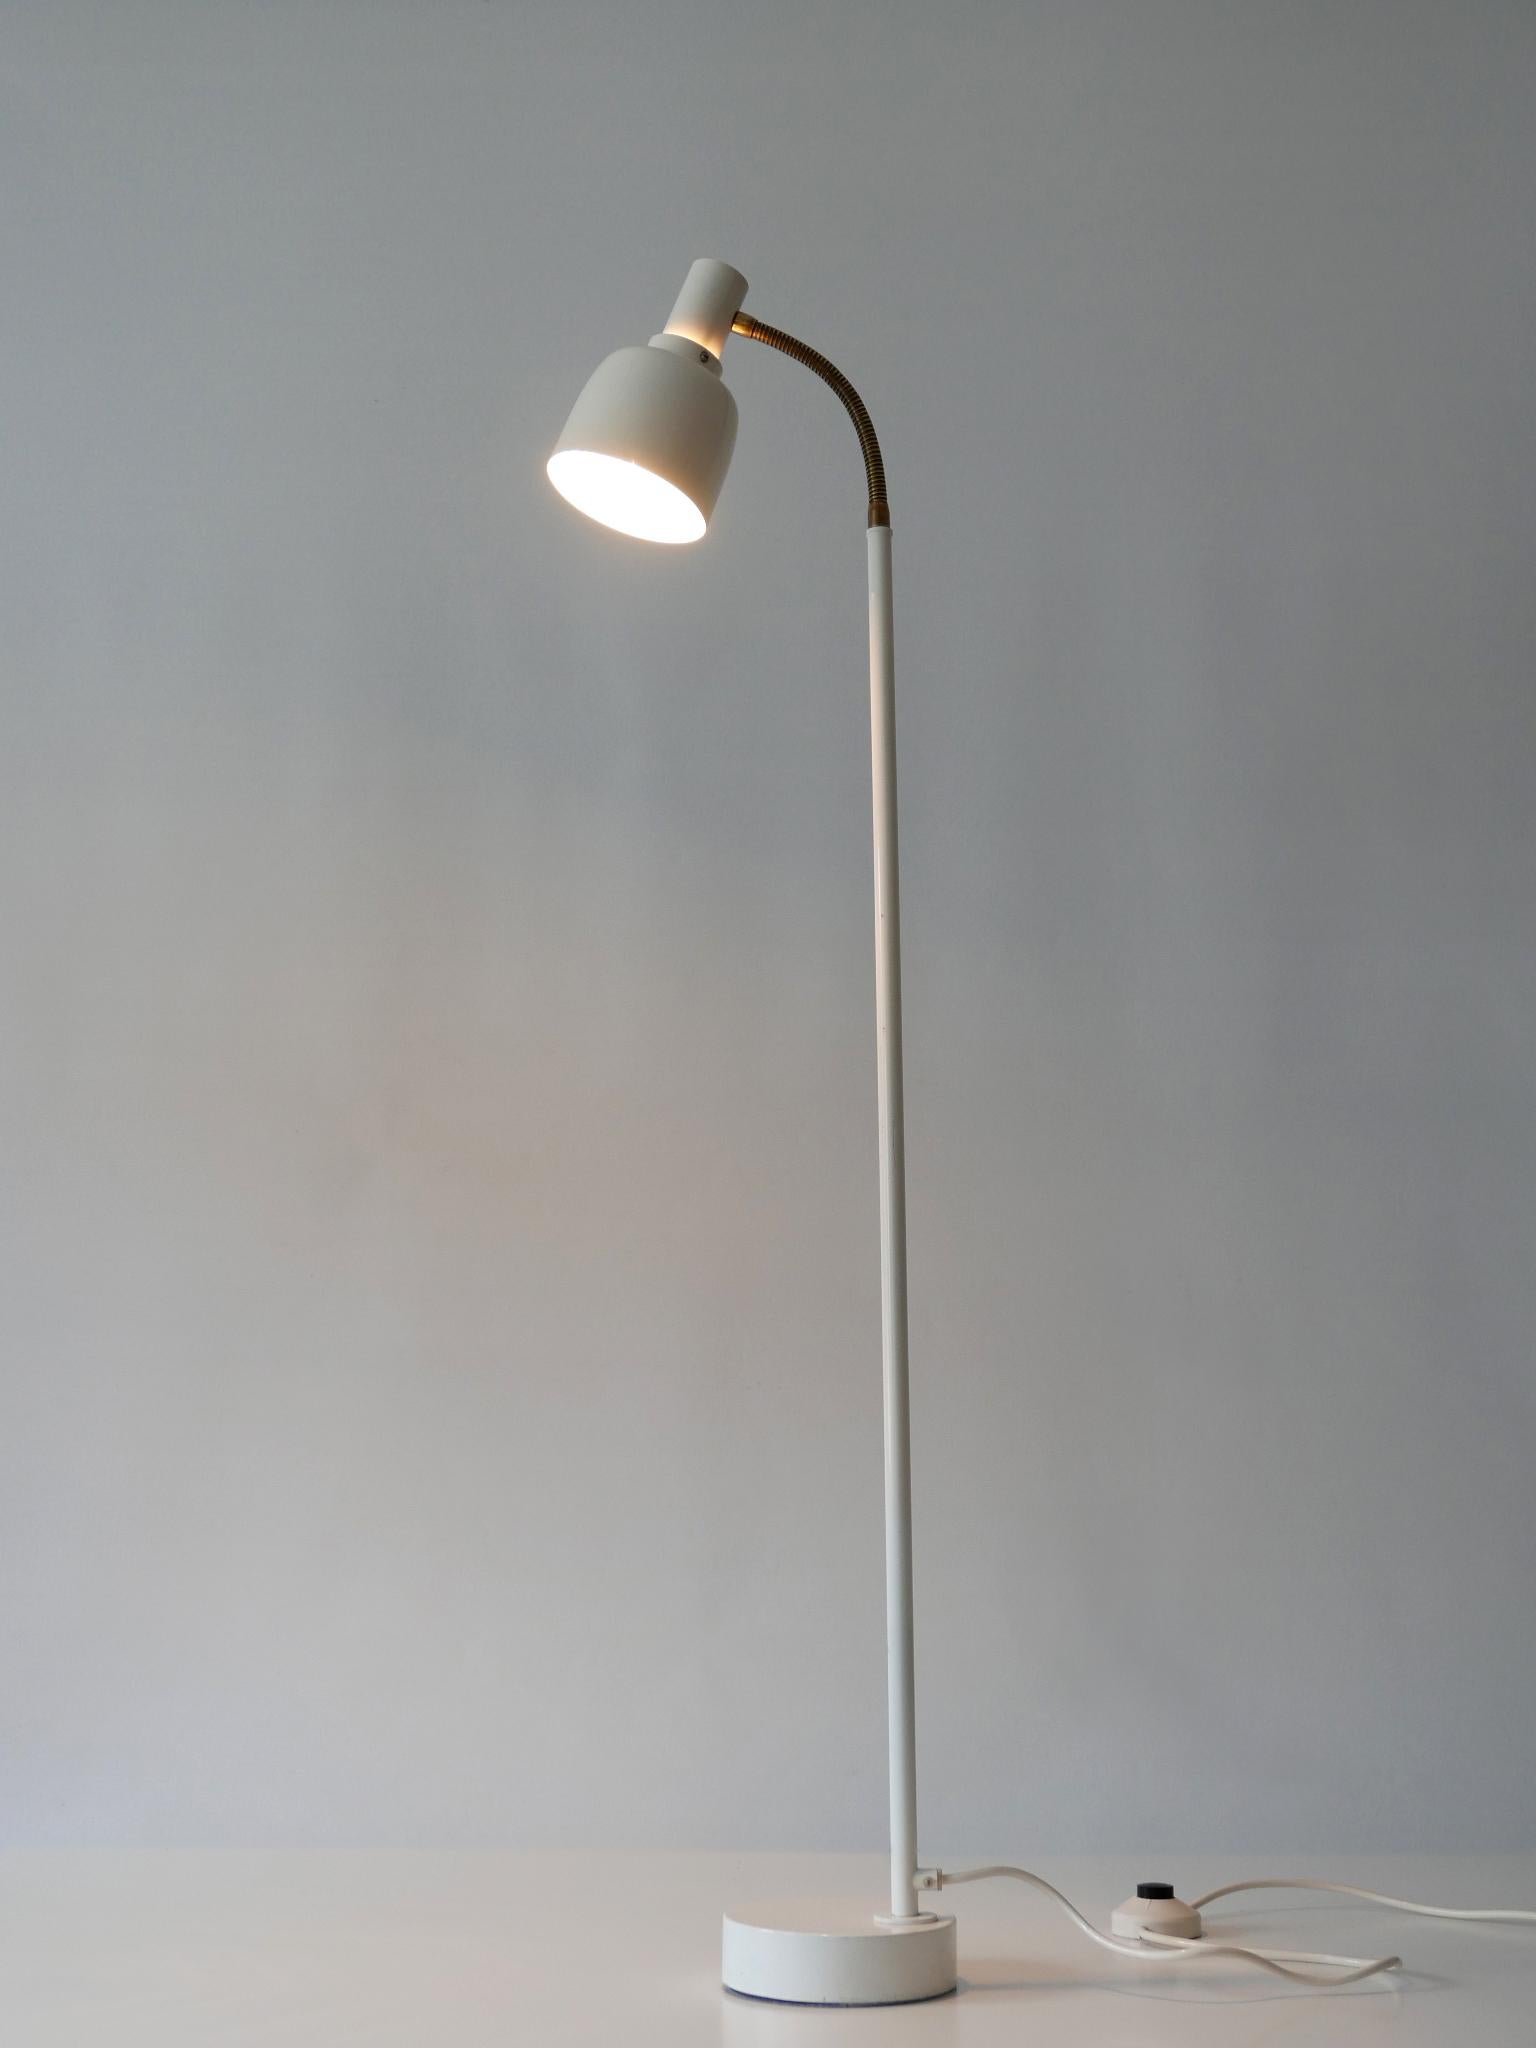 Rare Mid-Century Modern Floor Lamp or Reading Light by Hans-Agne Jakobsson 1960s For Sale 4